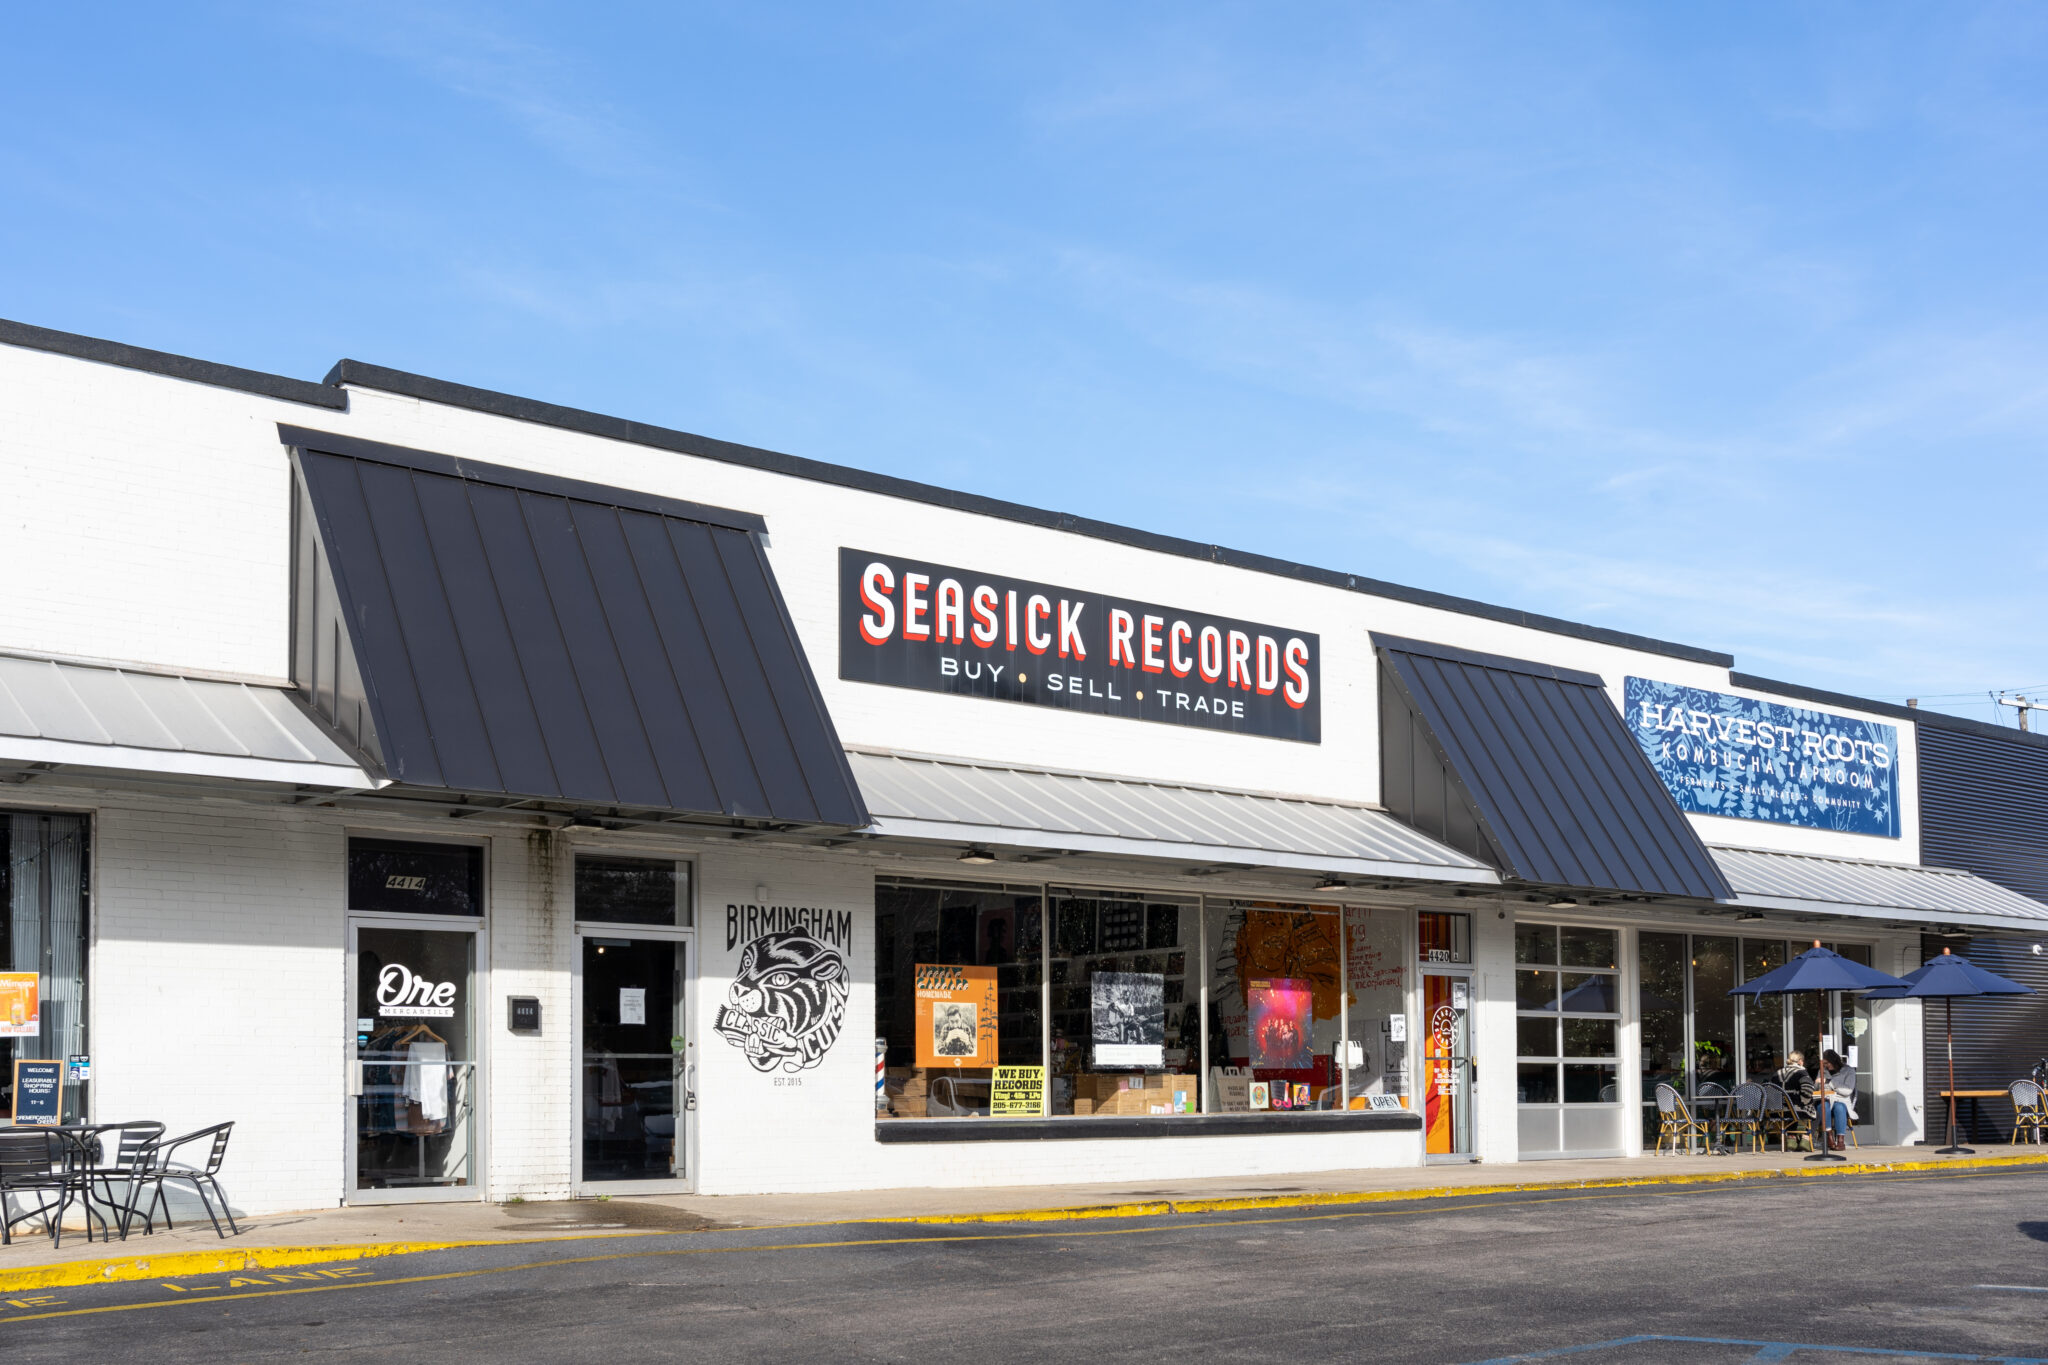 Rebirth / Seasickness Records